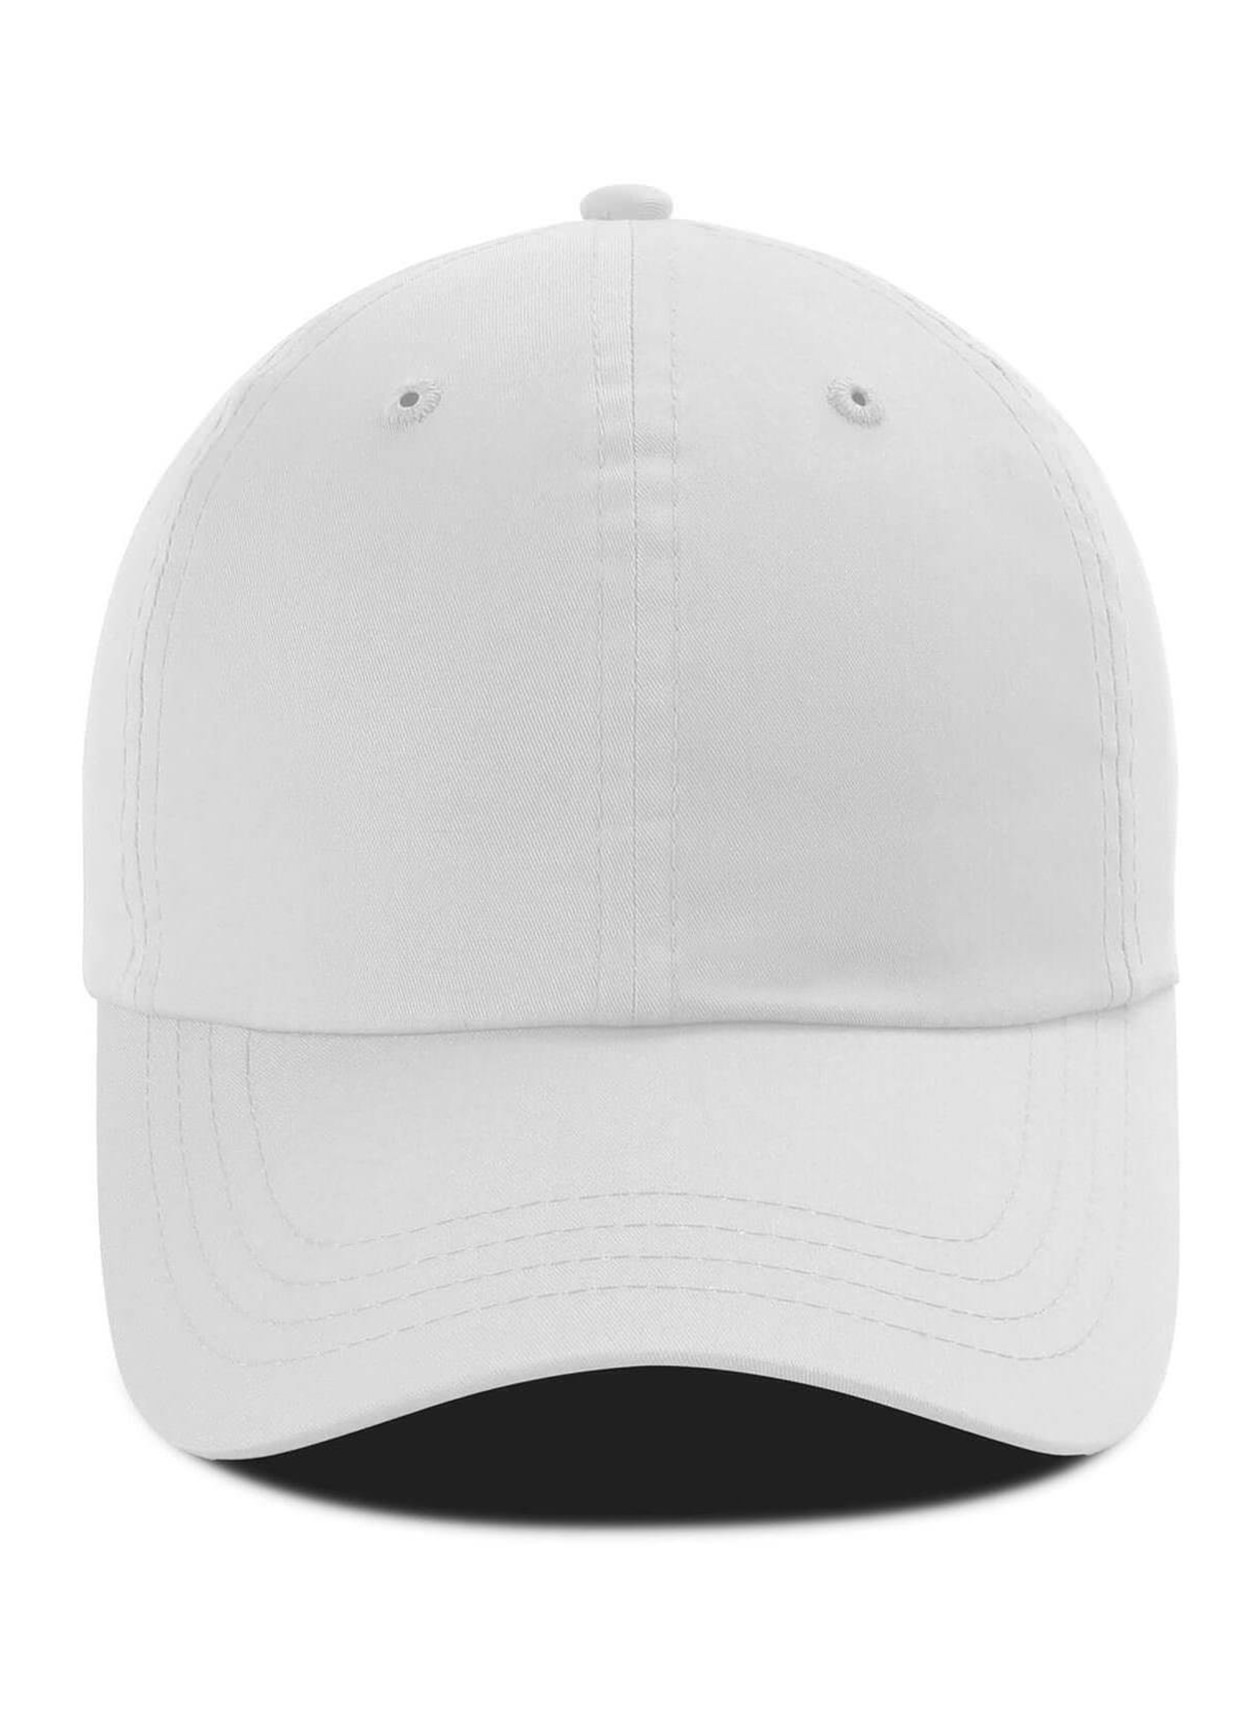 Men's Imperial Cotton Twill Adjustable Velcro Hat